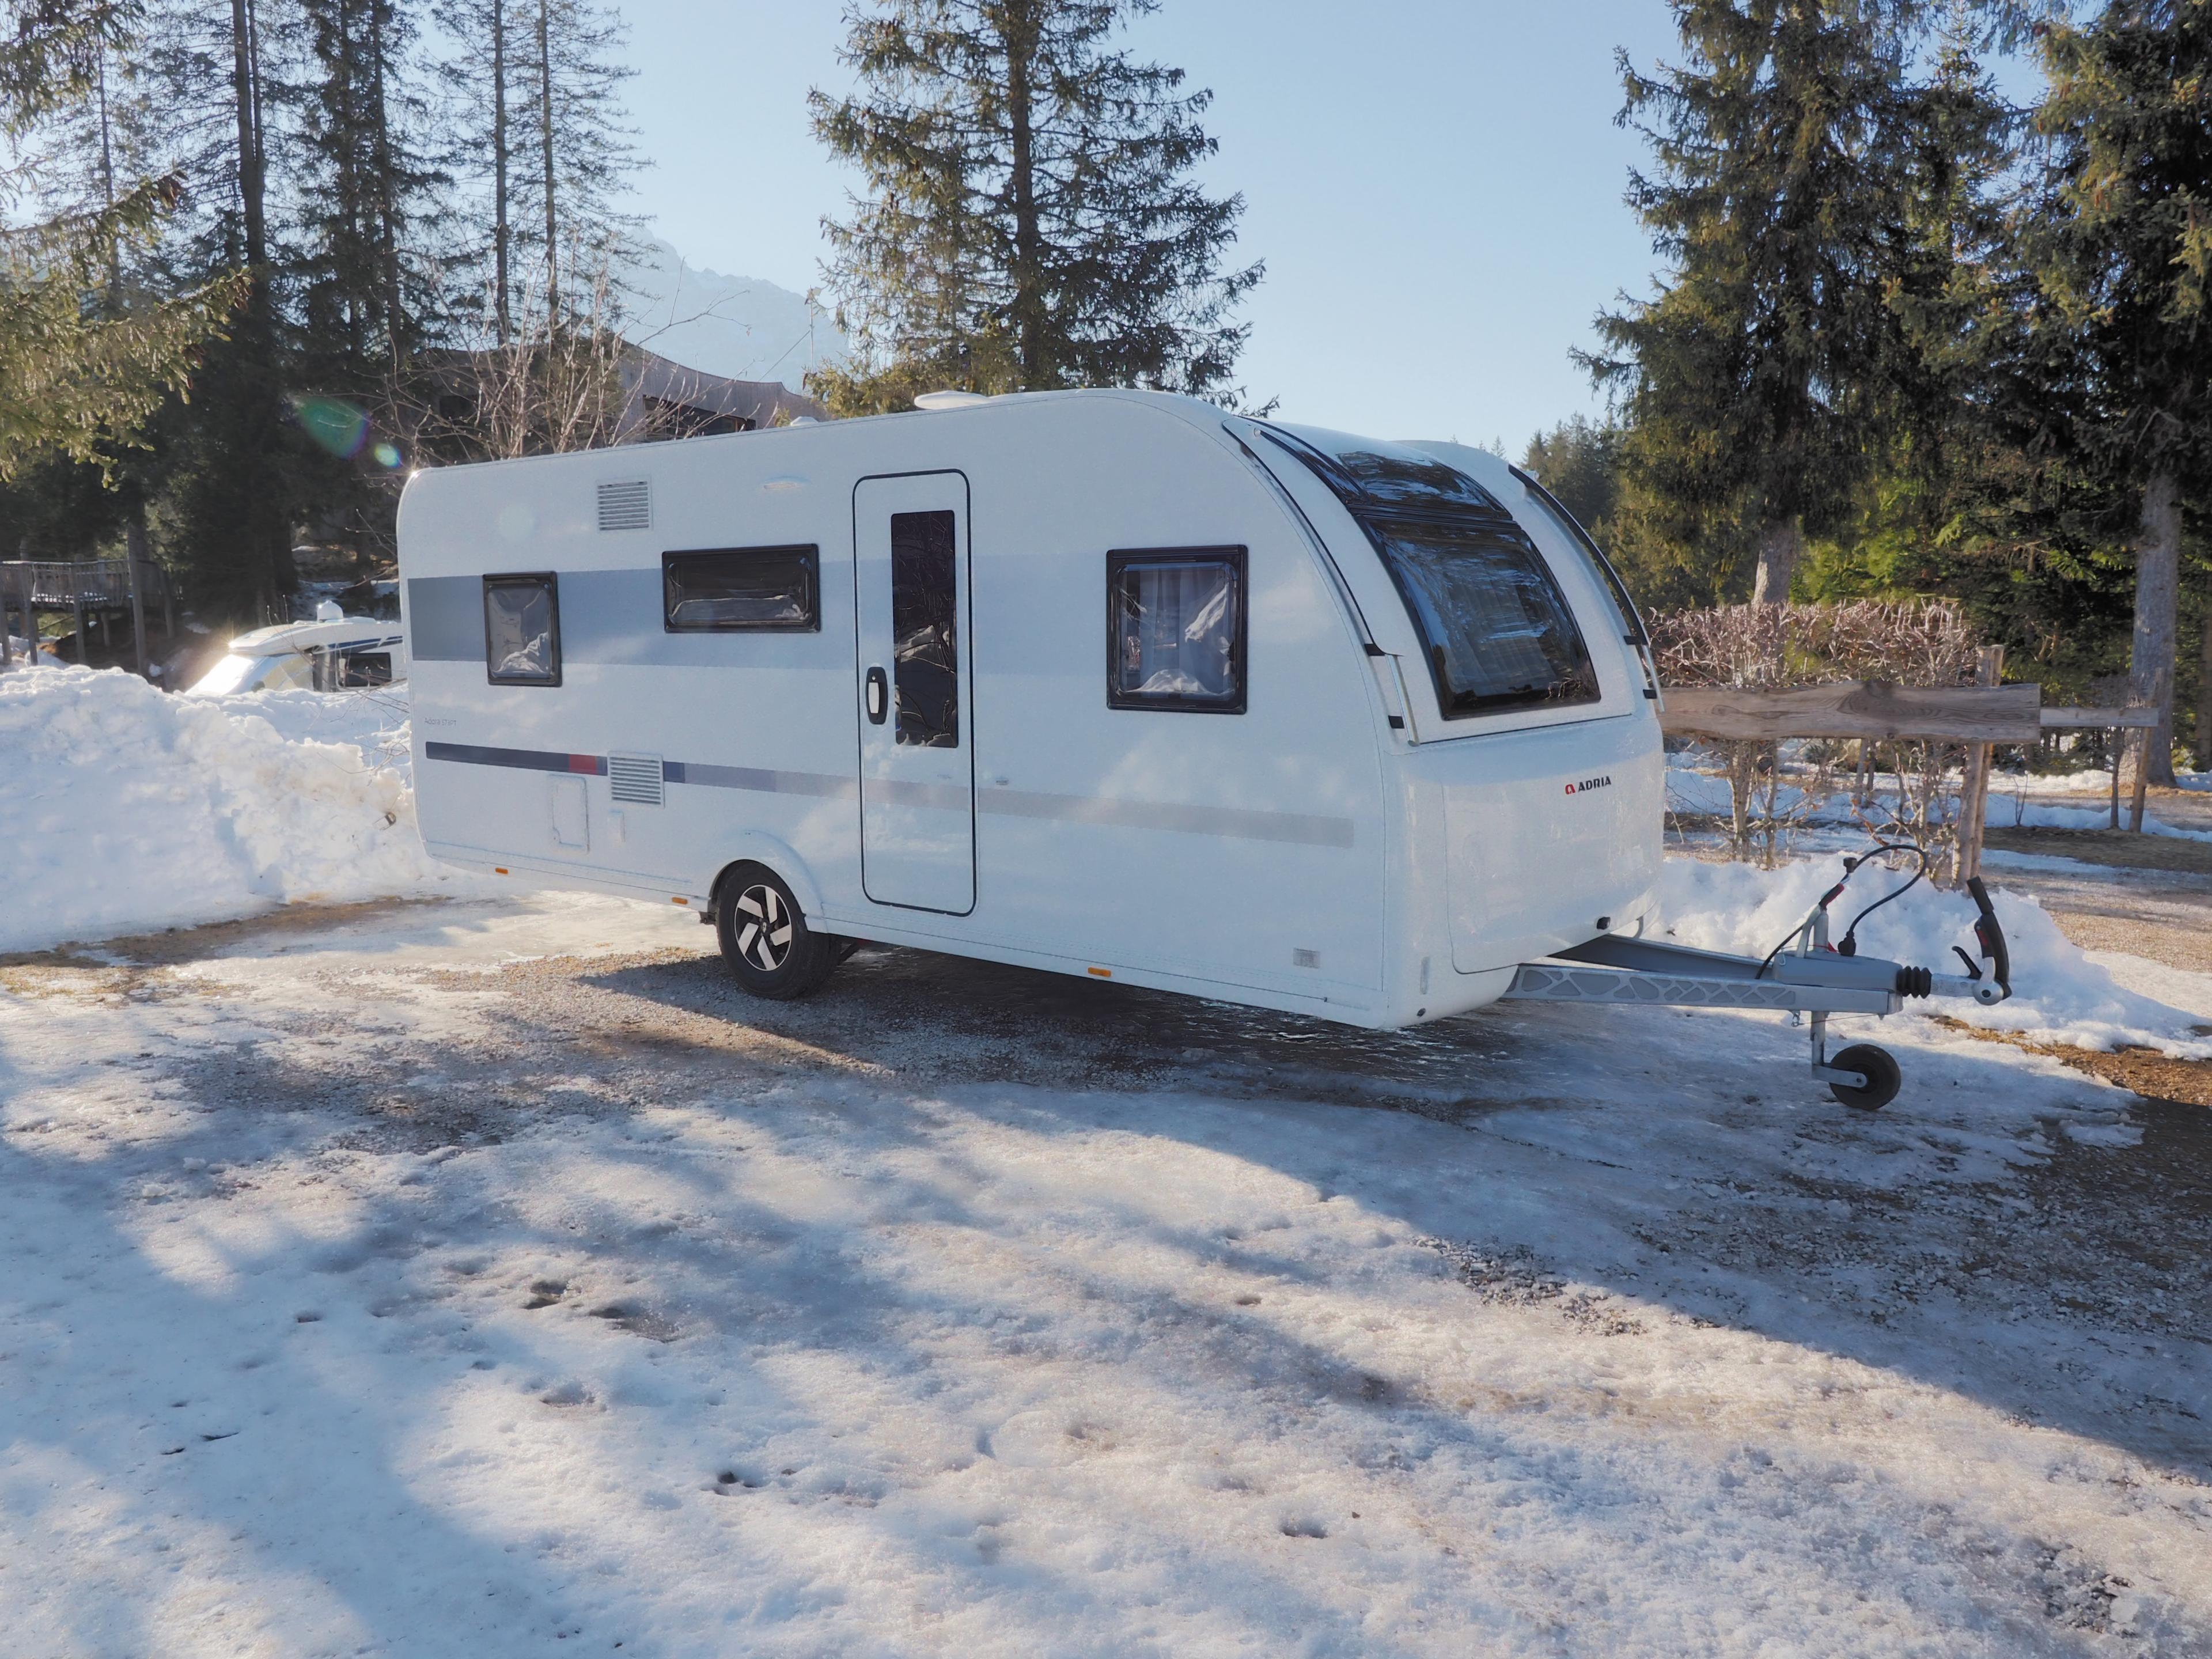 Adria Adora 573PT winter trailer test – image 1